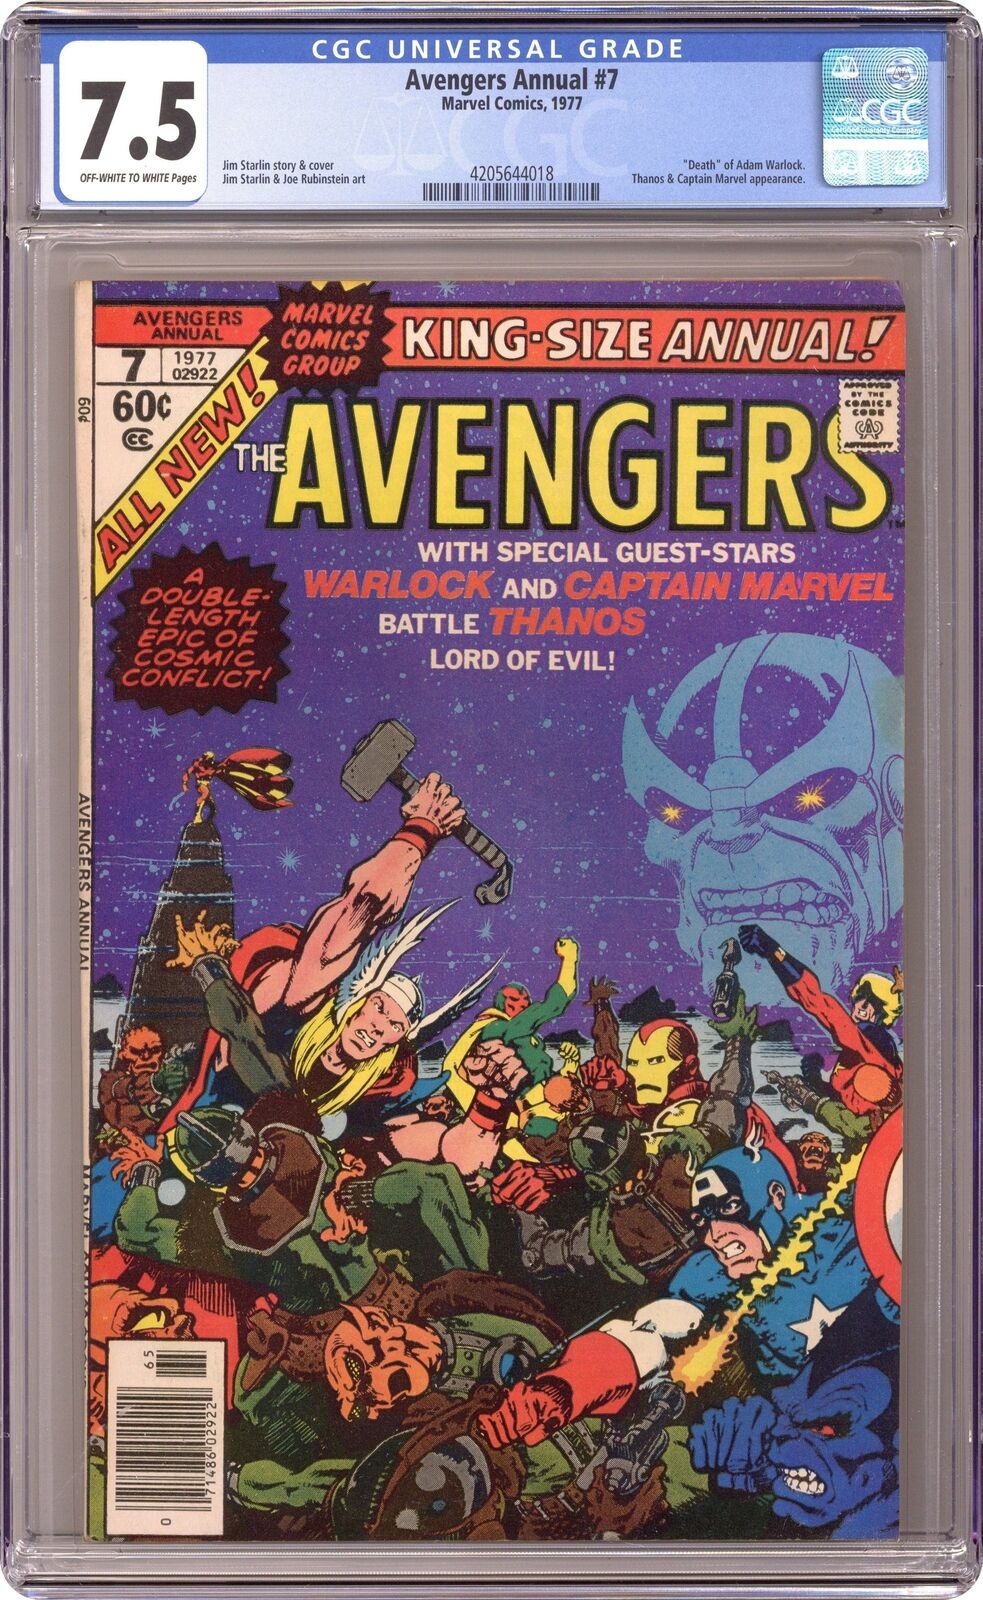 Avengers Annual #7 CGC 7.5 1977 4205644018 1st app. Space Gem